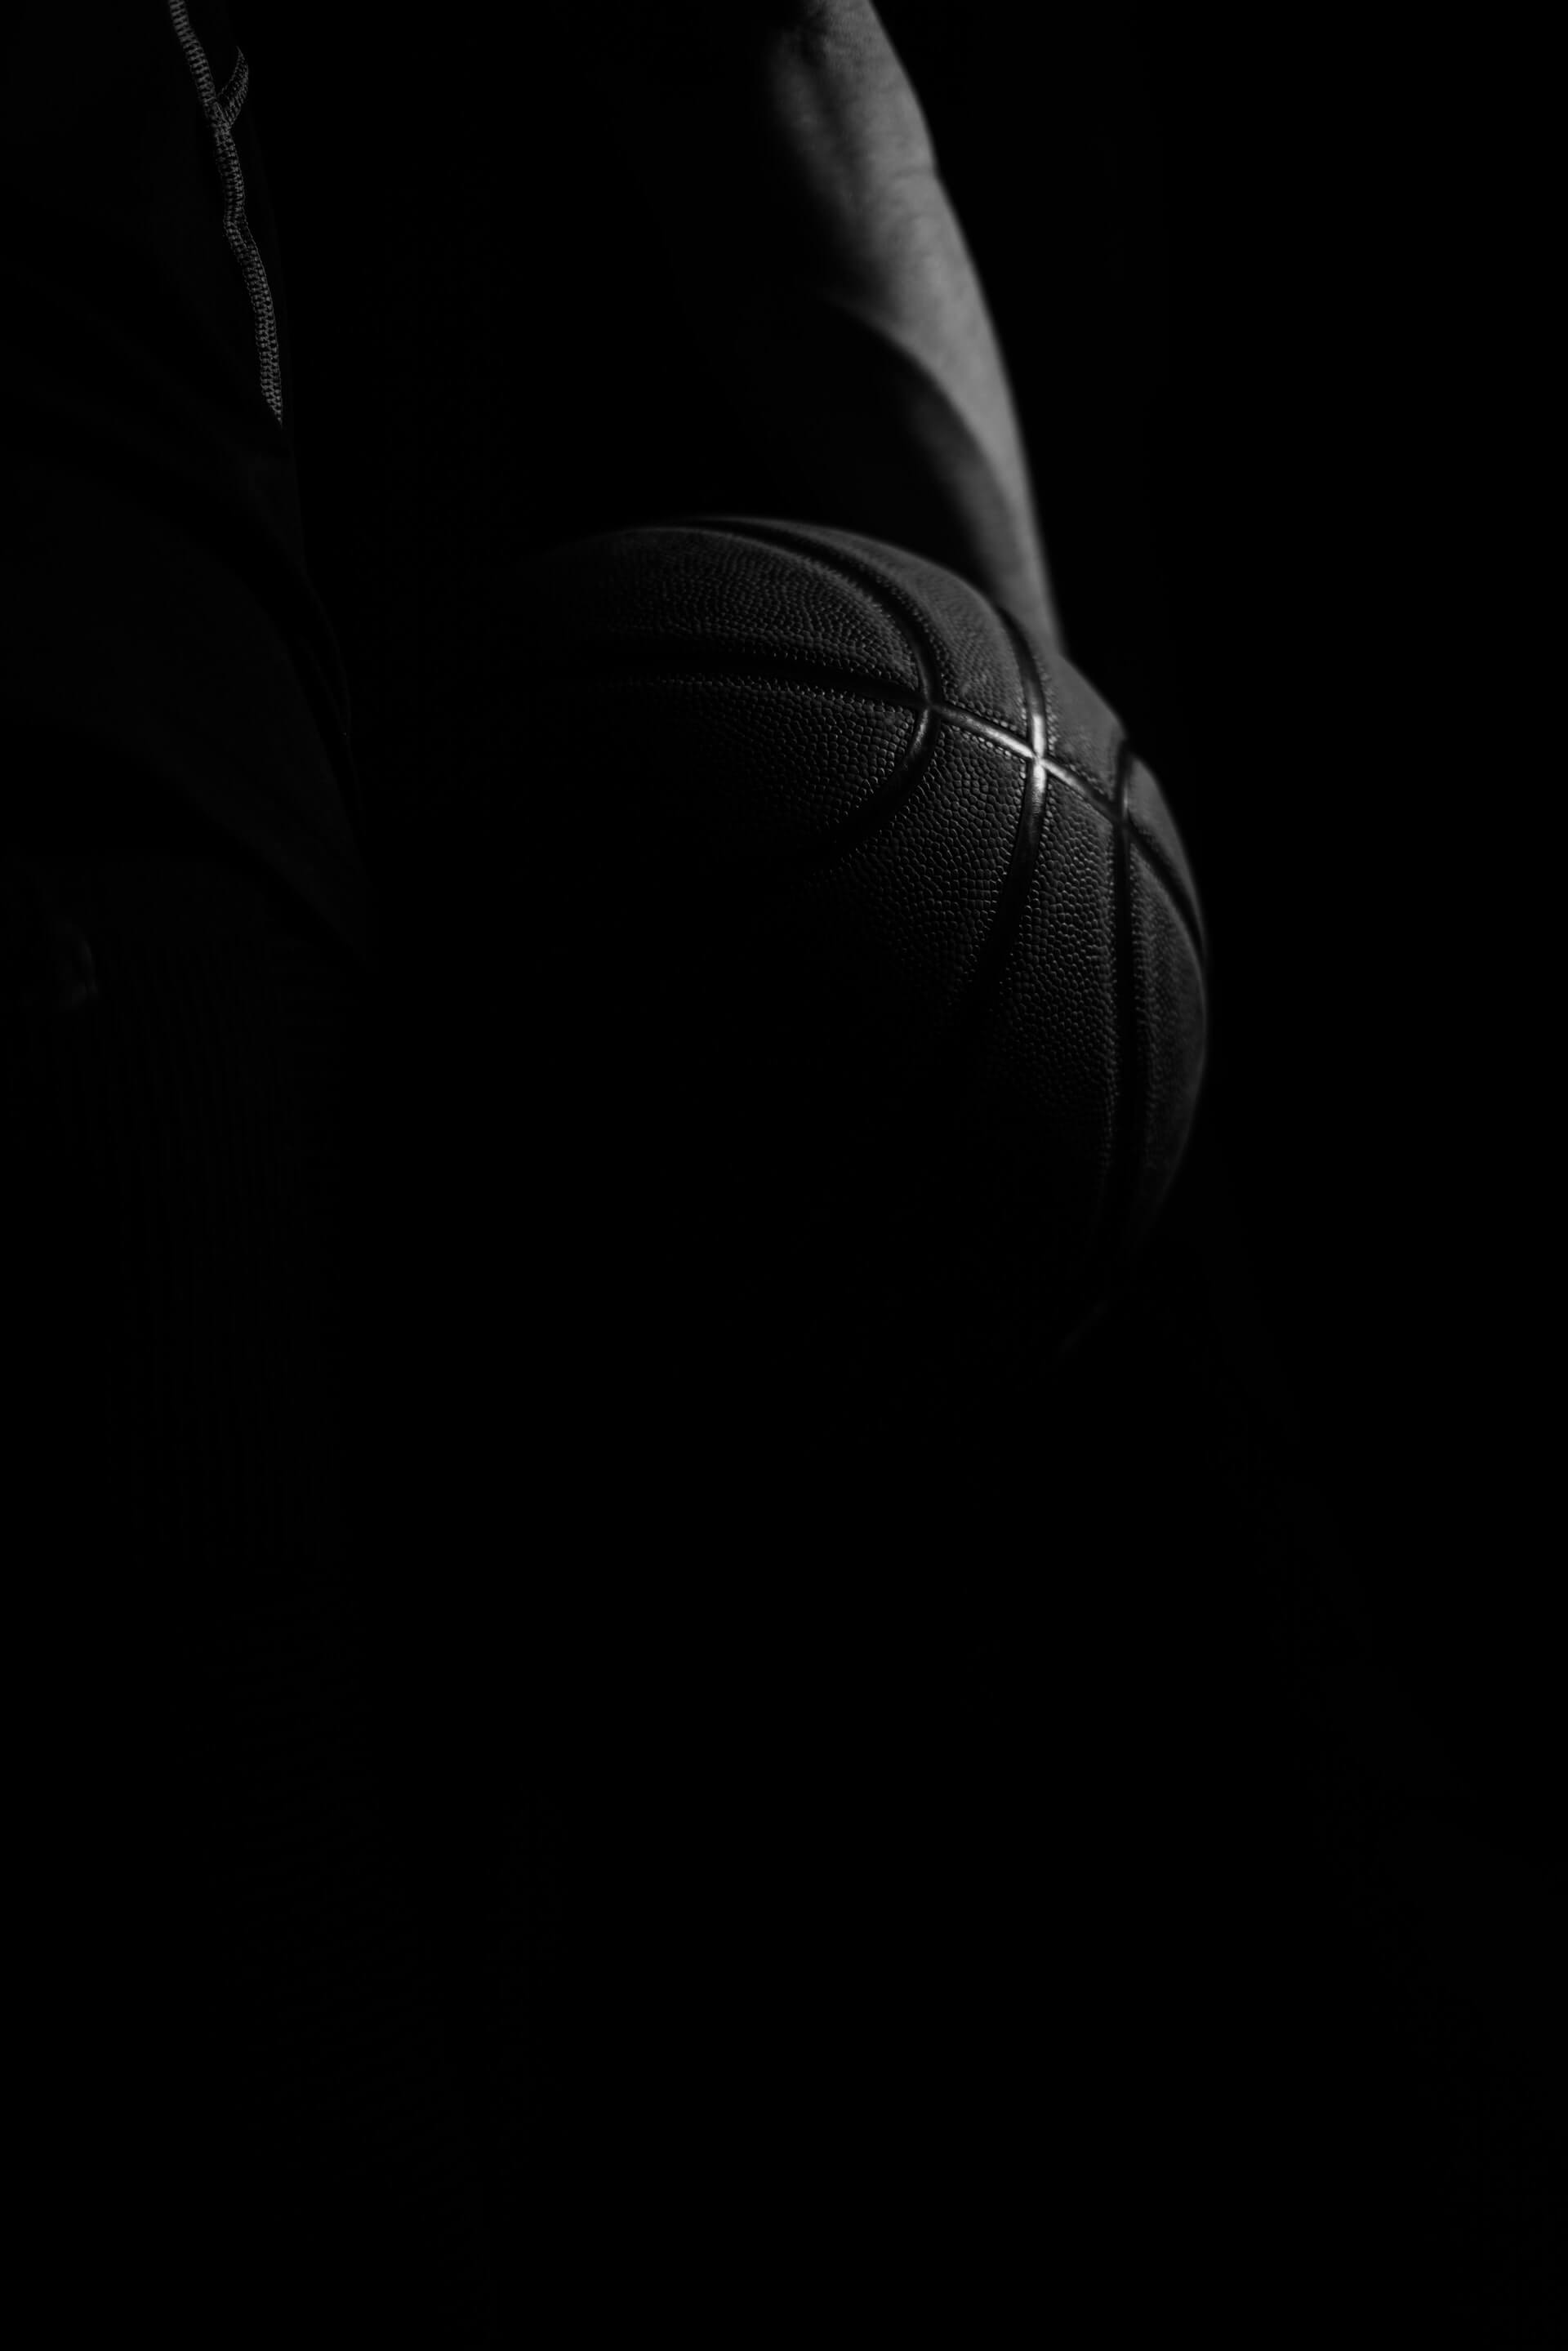 čovek drži košarkašku loptu